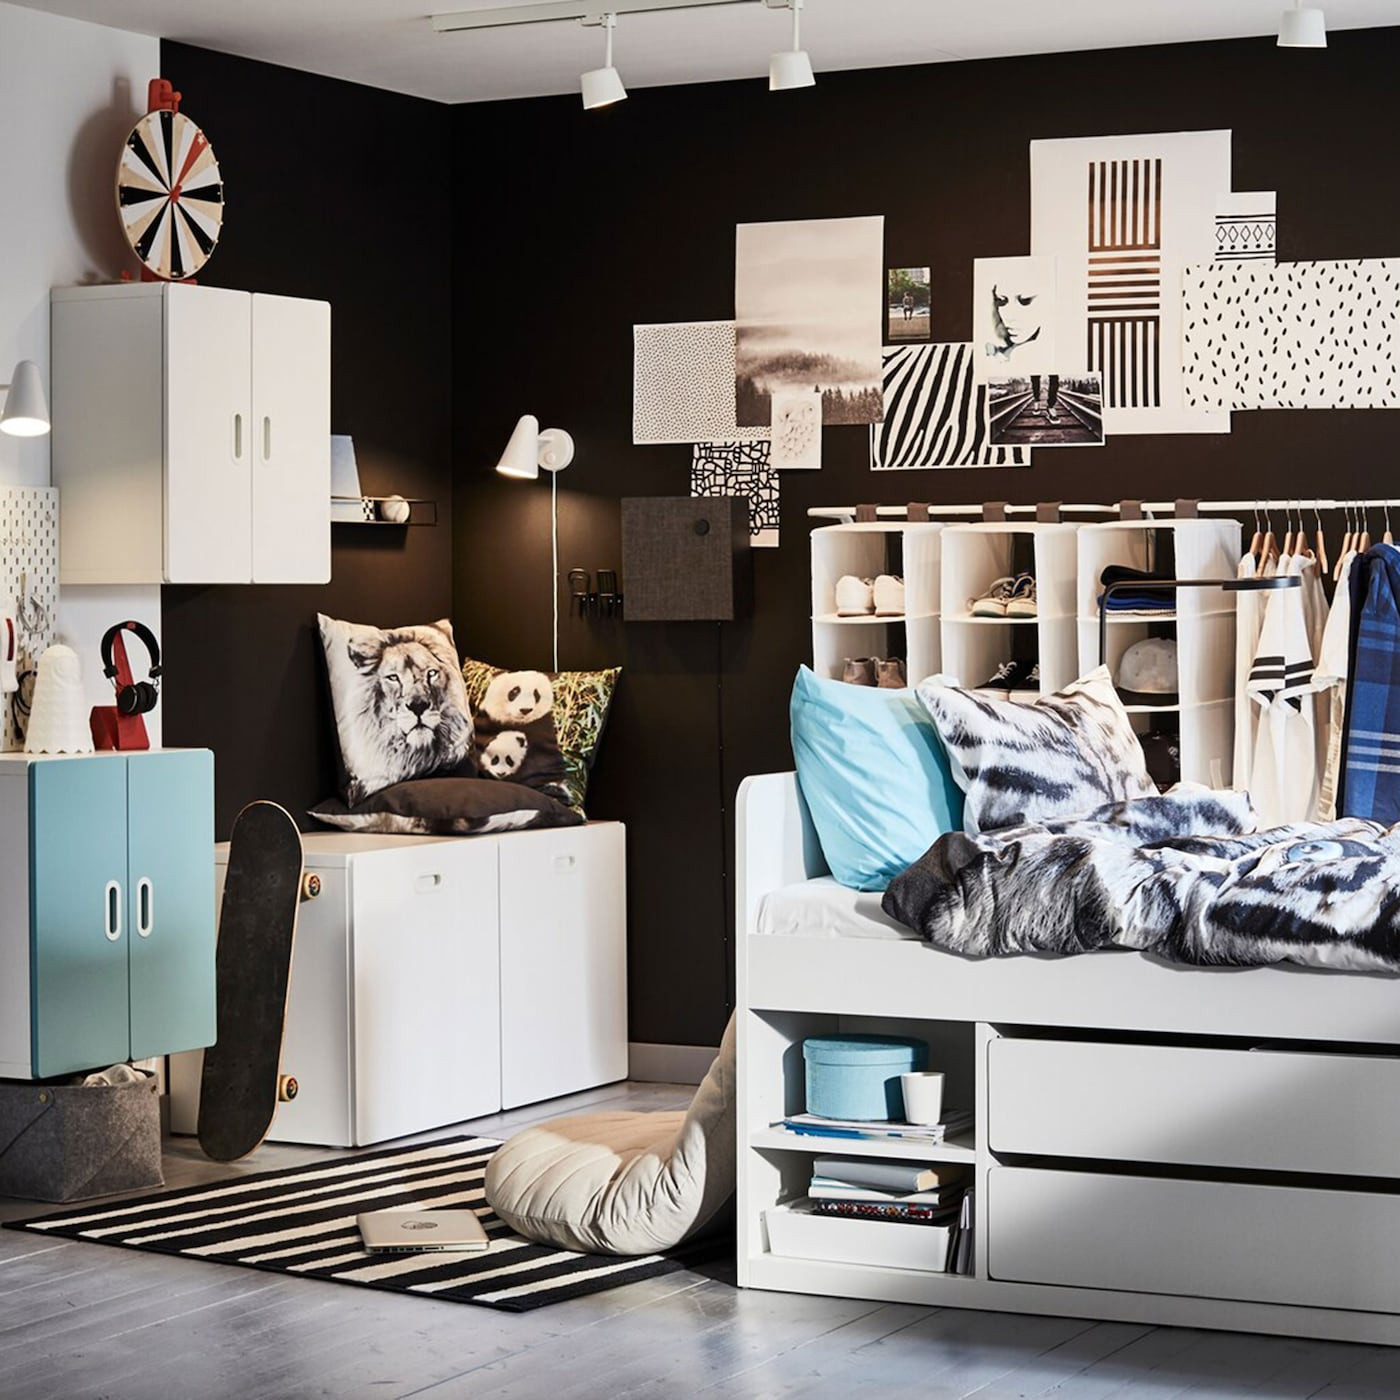 Ikea Kids Bedroom Ideas
 A cool and storage friendly teenage room IKEA